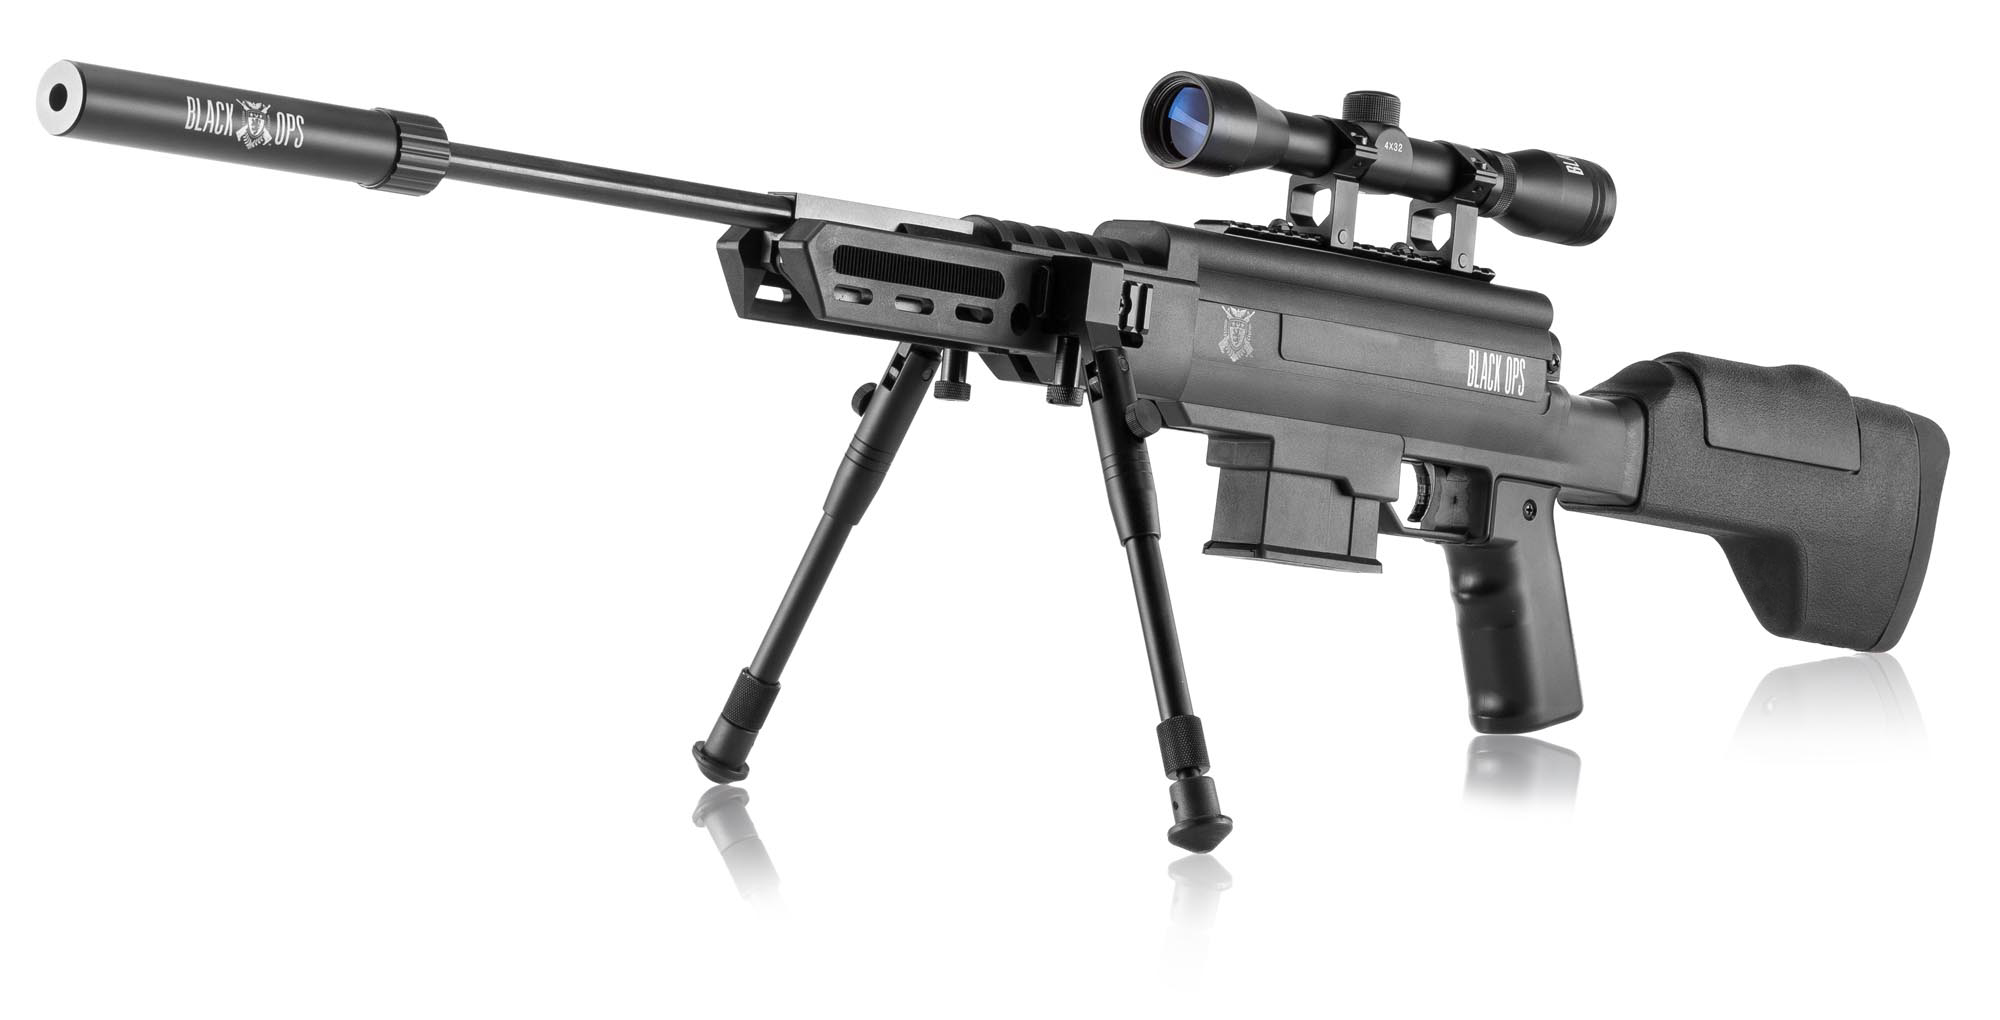 Photo Black Ops Sniper rifle full power (19,9 joule) - break Barrel - Cal 4,5mm pellet